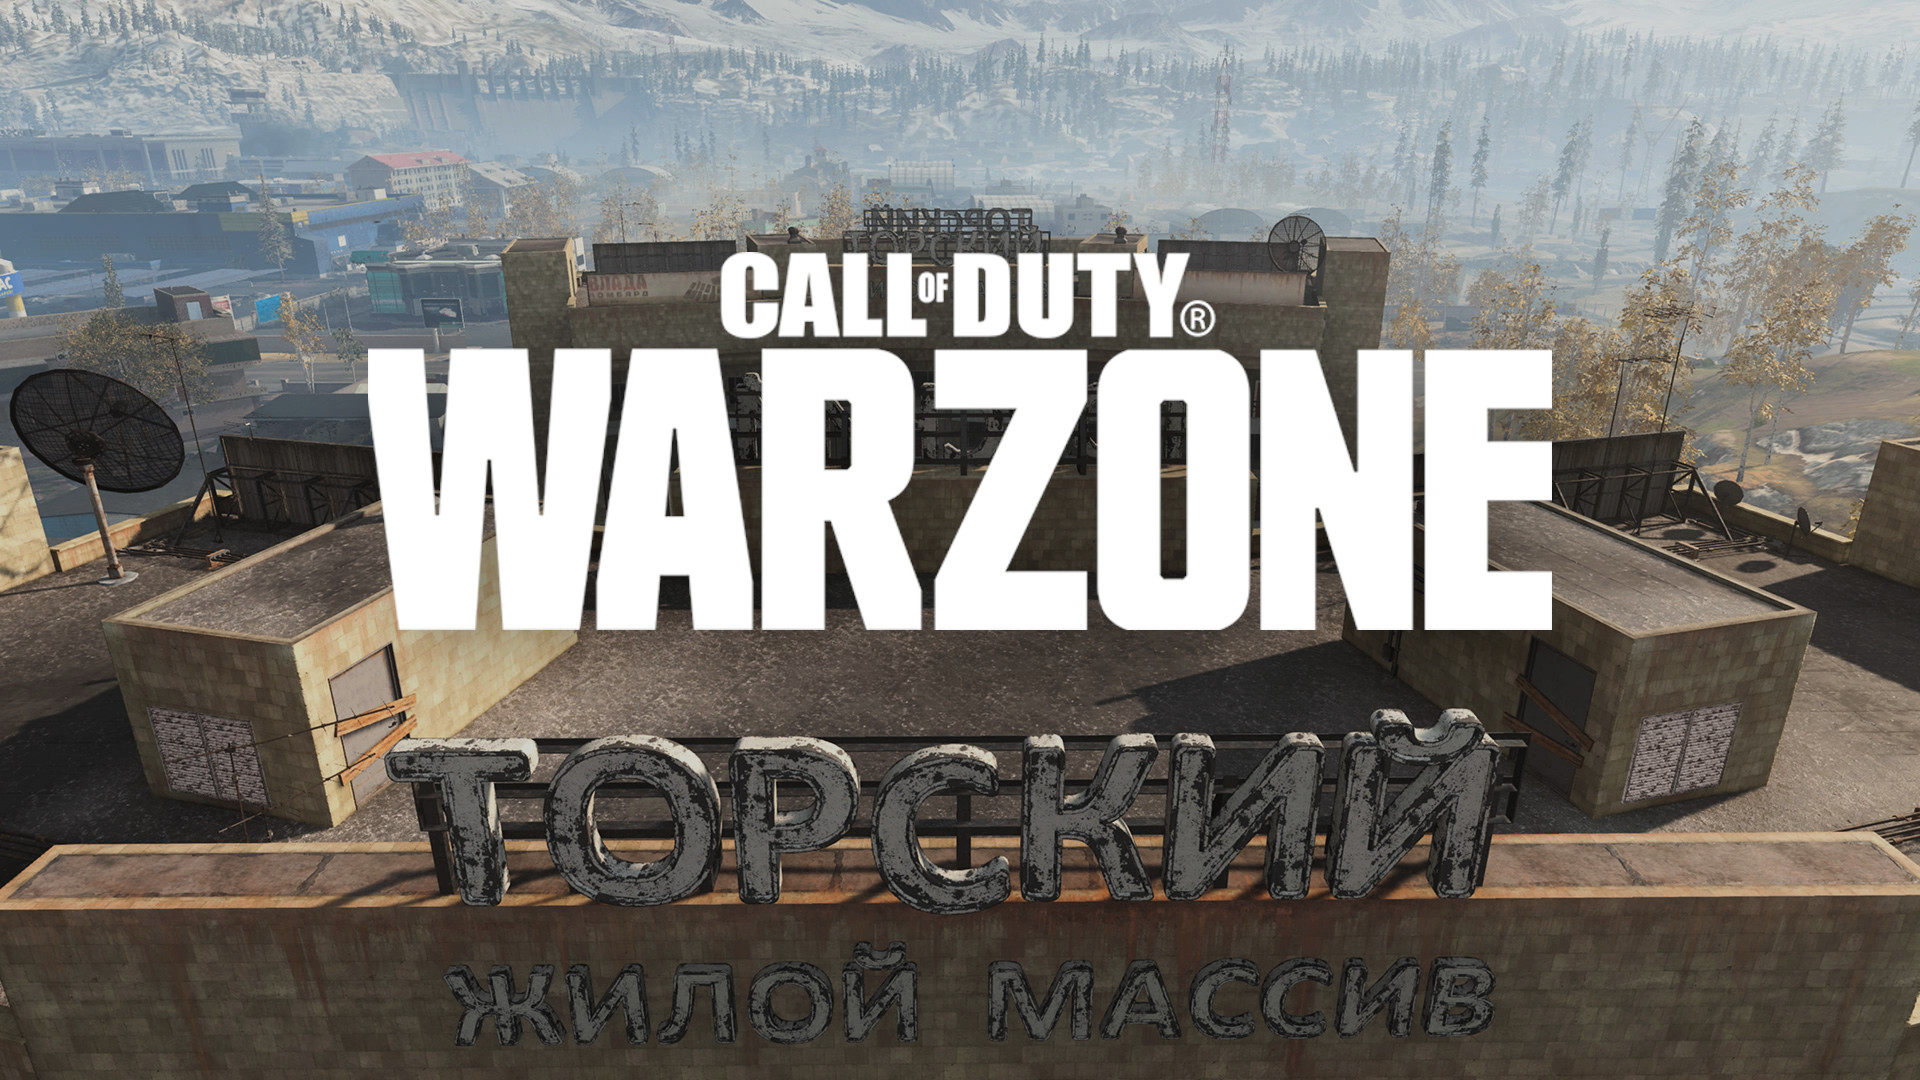 Términos de la jerga de Warzone de Call of Duty